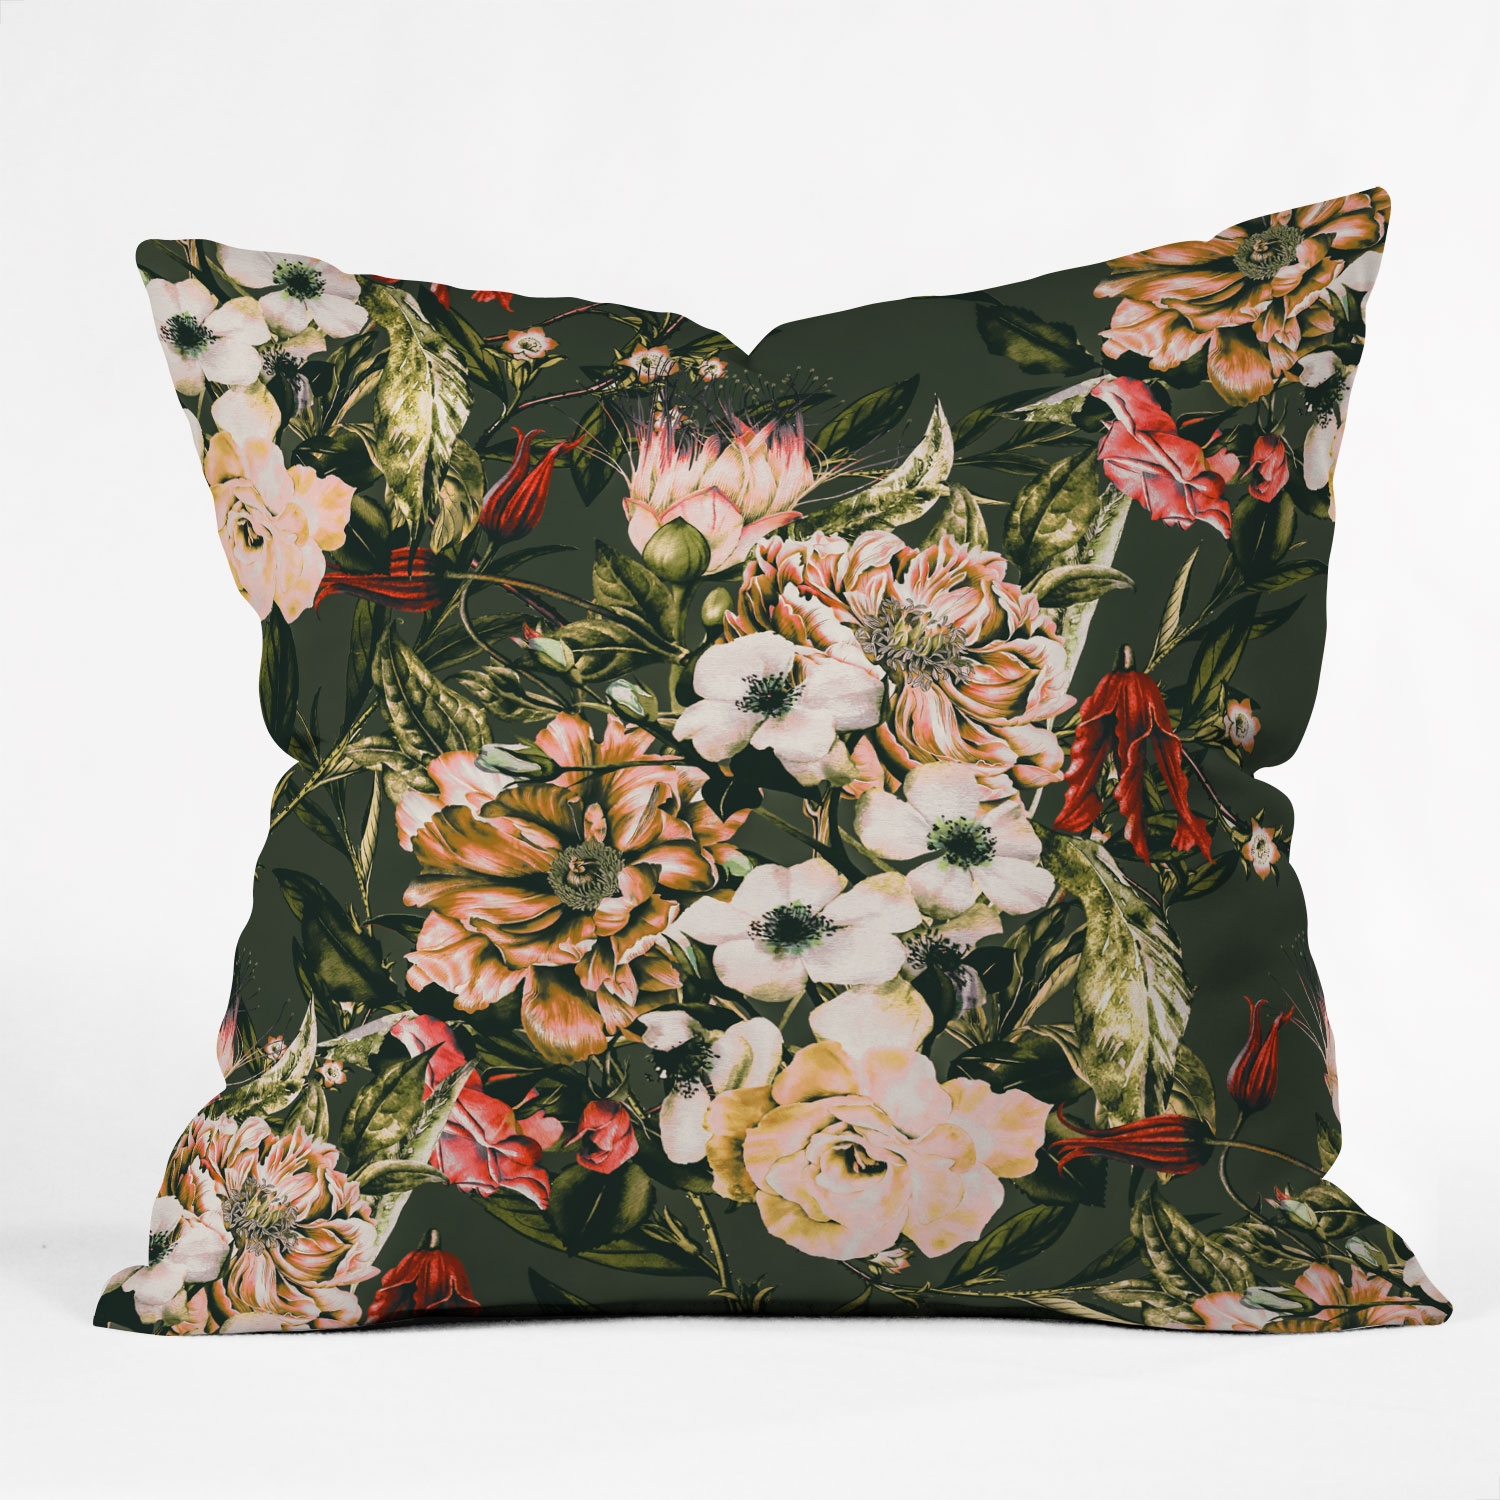 Dark Wild Floral 03 by Marta Barragan Camarasa - Outdoor Throw Pillow 18" x 18" - Image 1